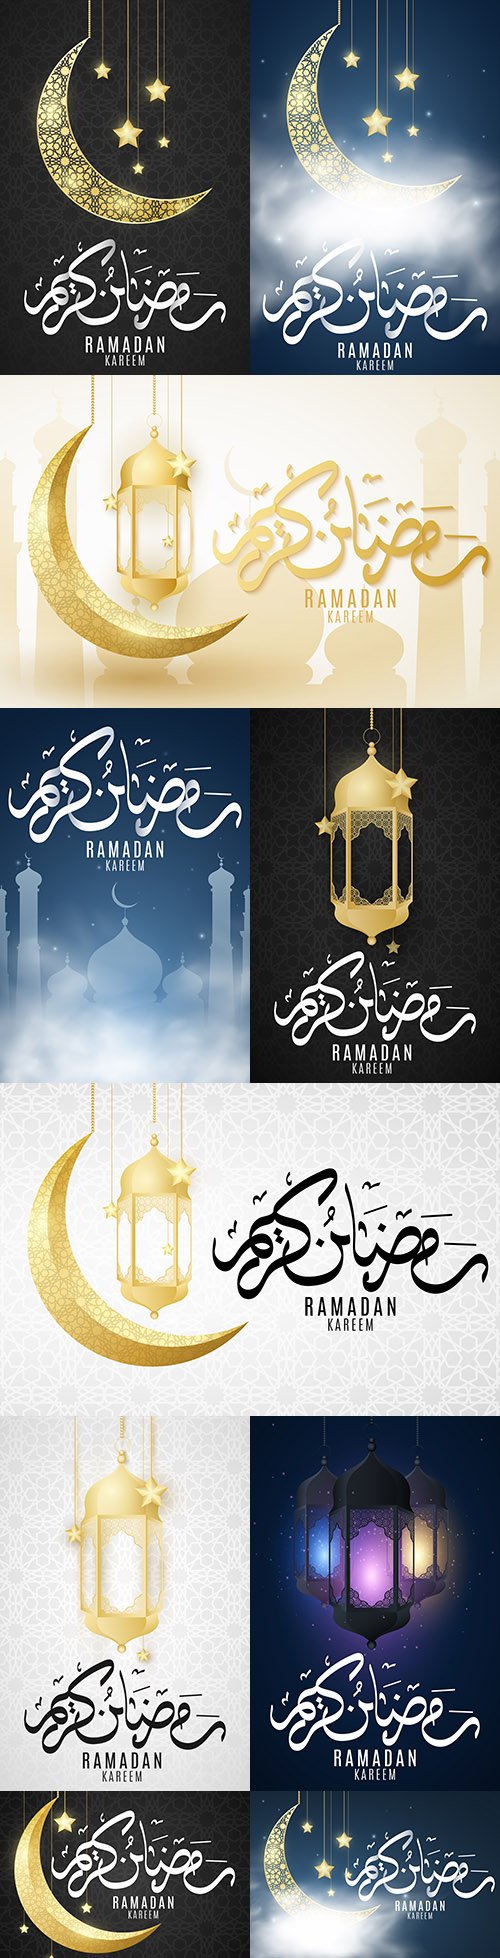 Ramadan Kareem Arab calligraphy design illustrations 21